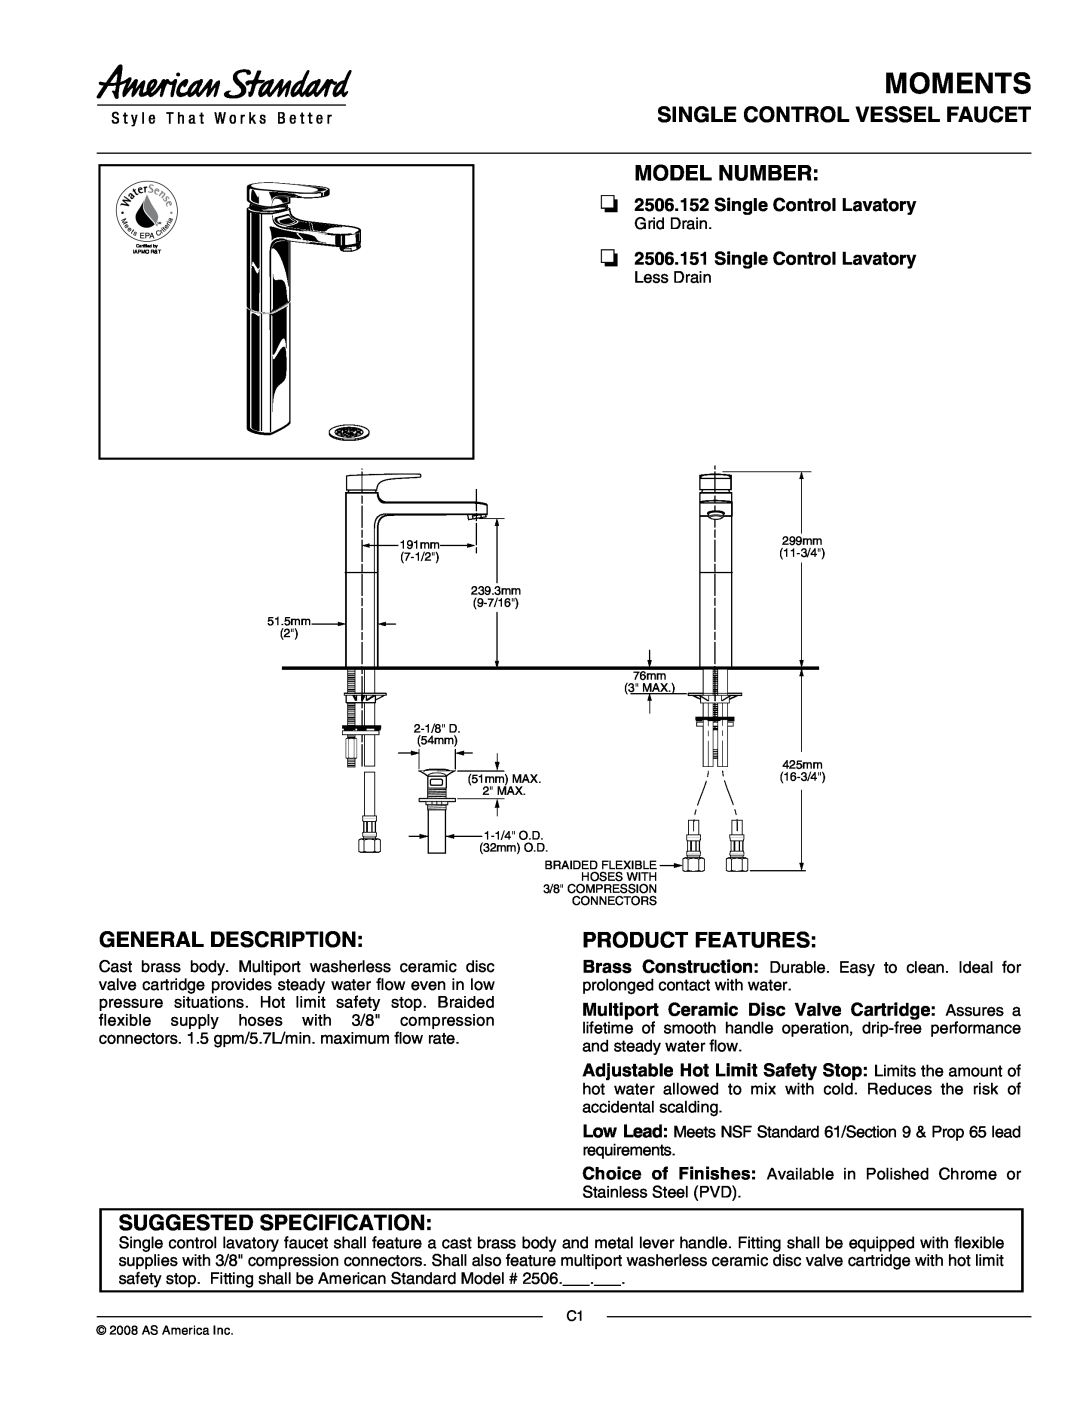 American Standard 2506.152 specifications Moments, Single Control Vessel Faucet Model Number, General Description 